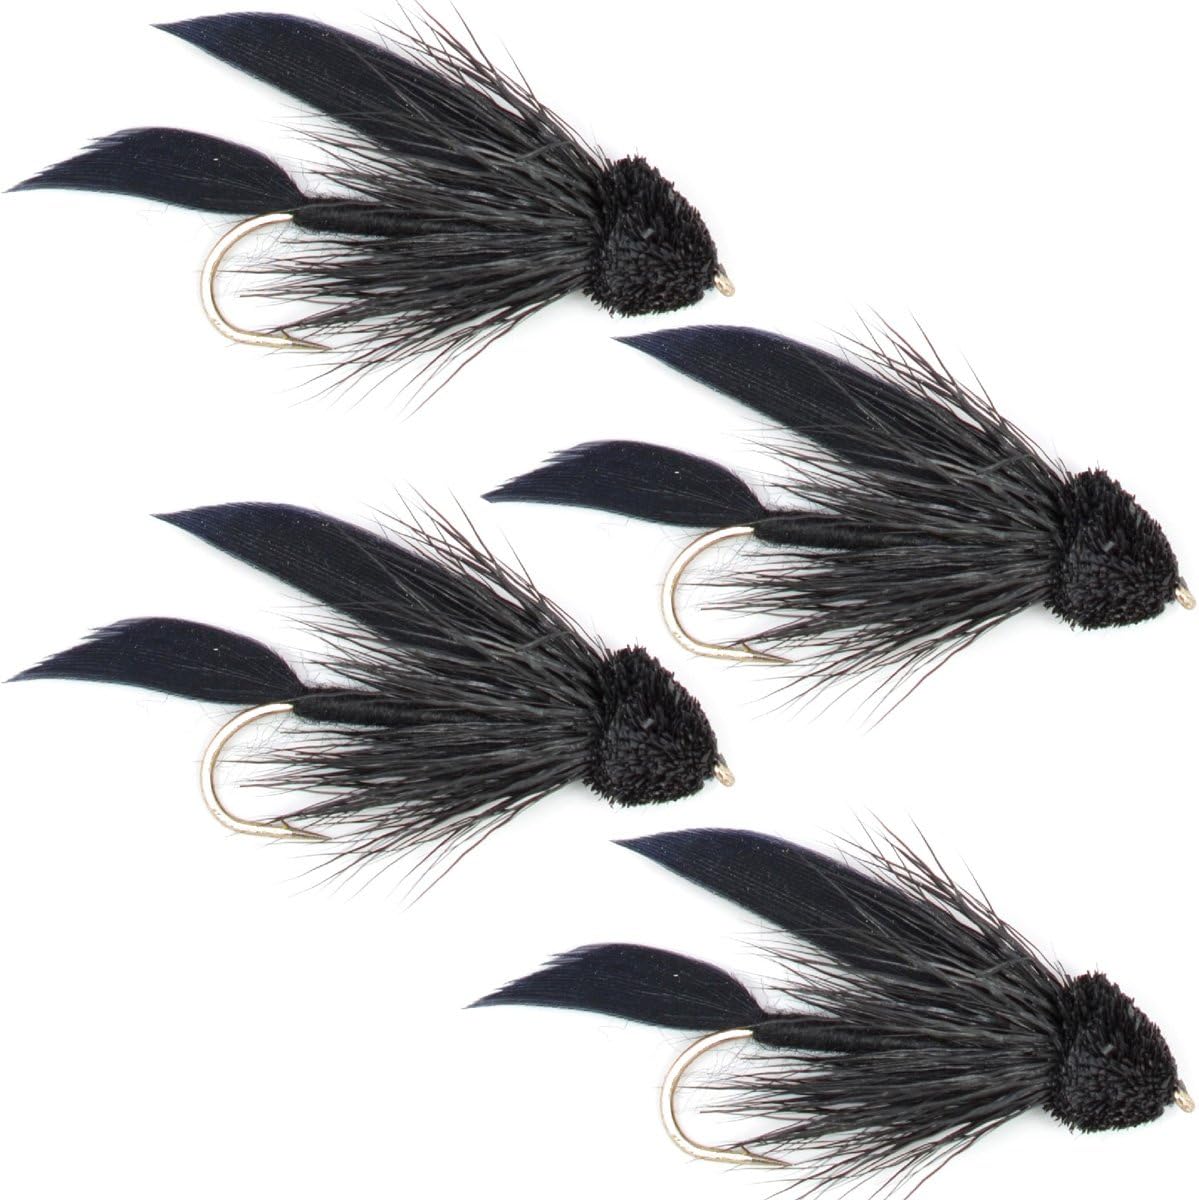 Black Muddler Minnow Fly Fishing Flies - Classic Streamers - Set of 4 Flies Hook Size 4